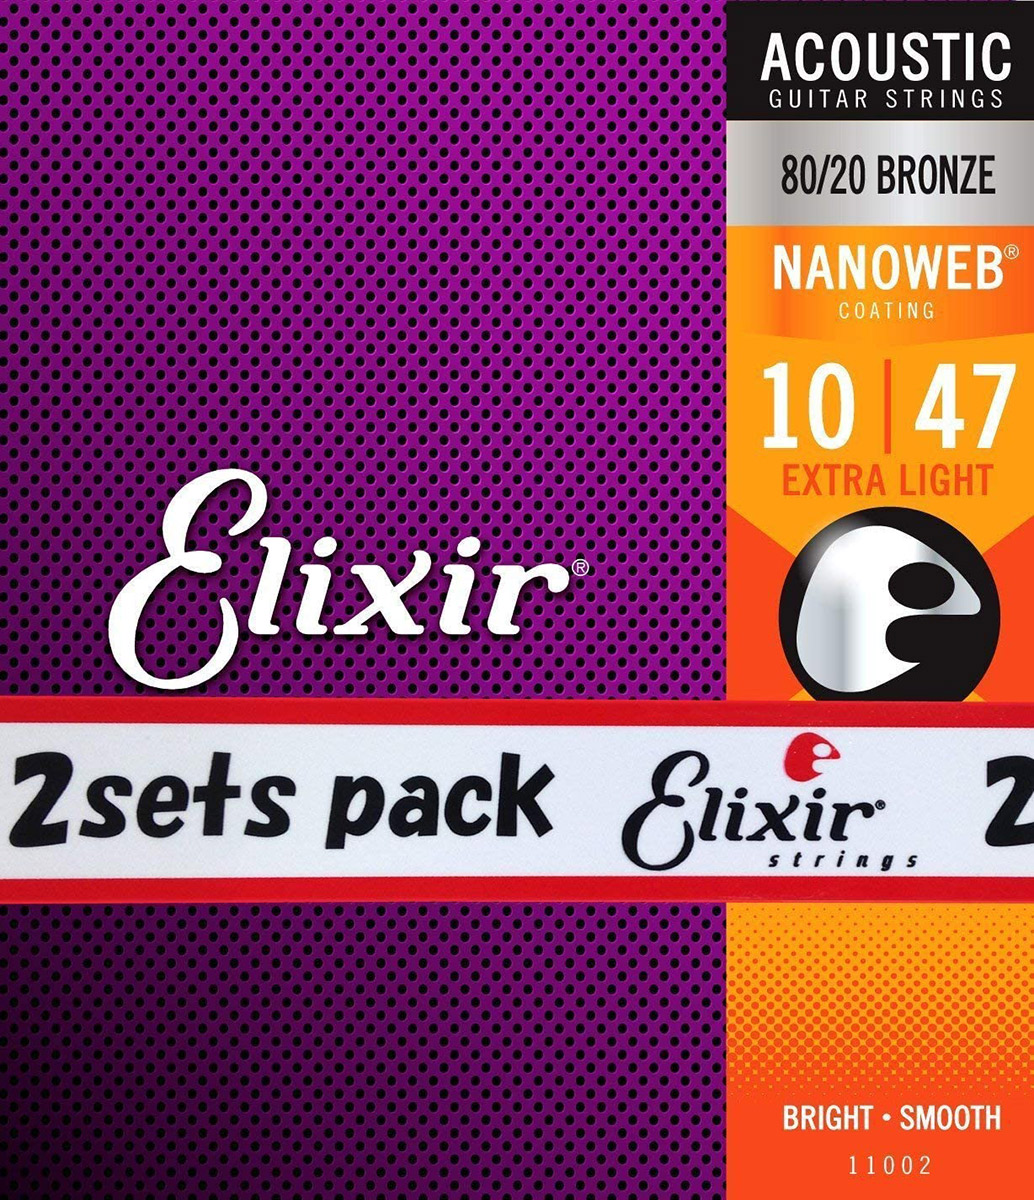 Elixir NANOWEB 80/20ブロンズ 10-47 エクストラライト 2セット #11002 エリクサー アコースティックギター弦 お買い得な 2パック 島村楽器オンラインストア